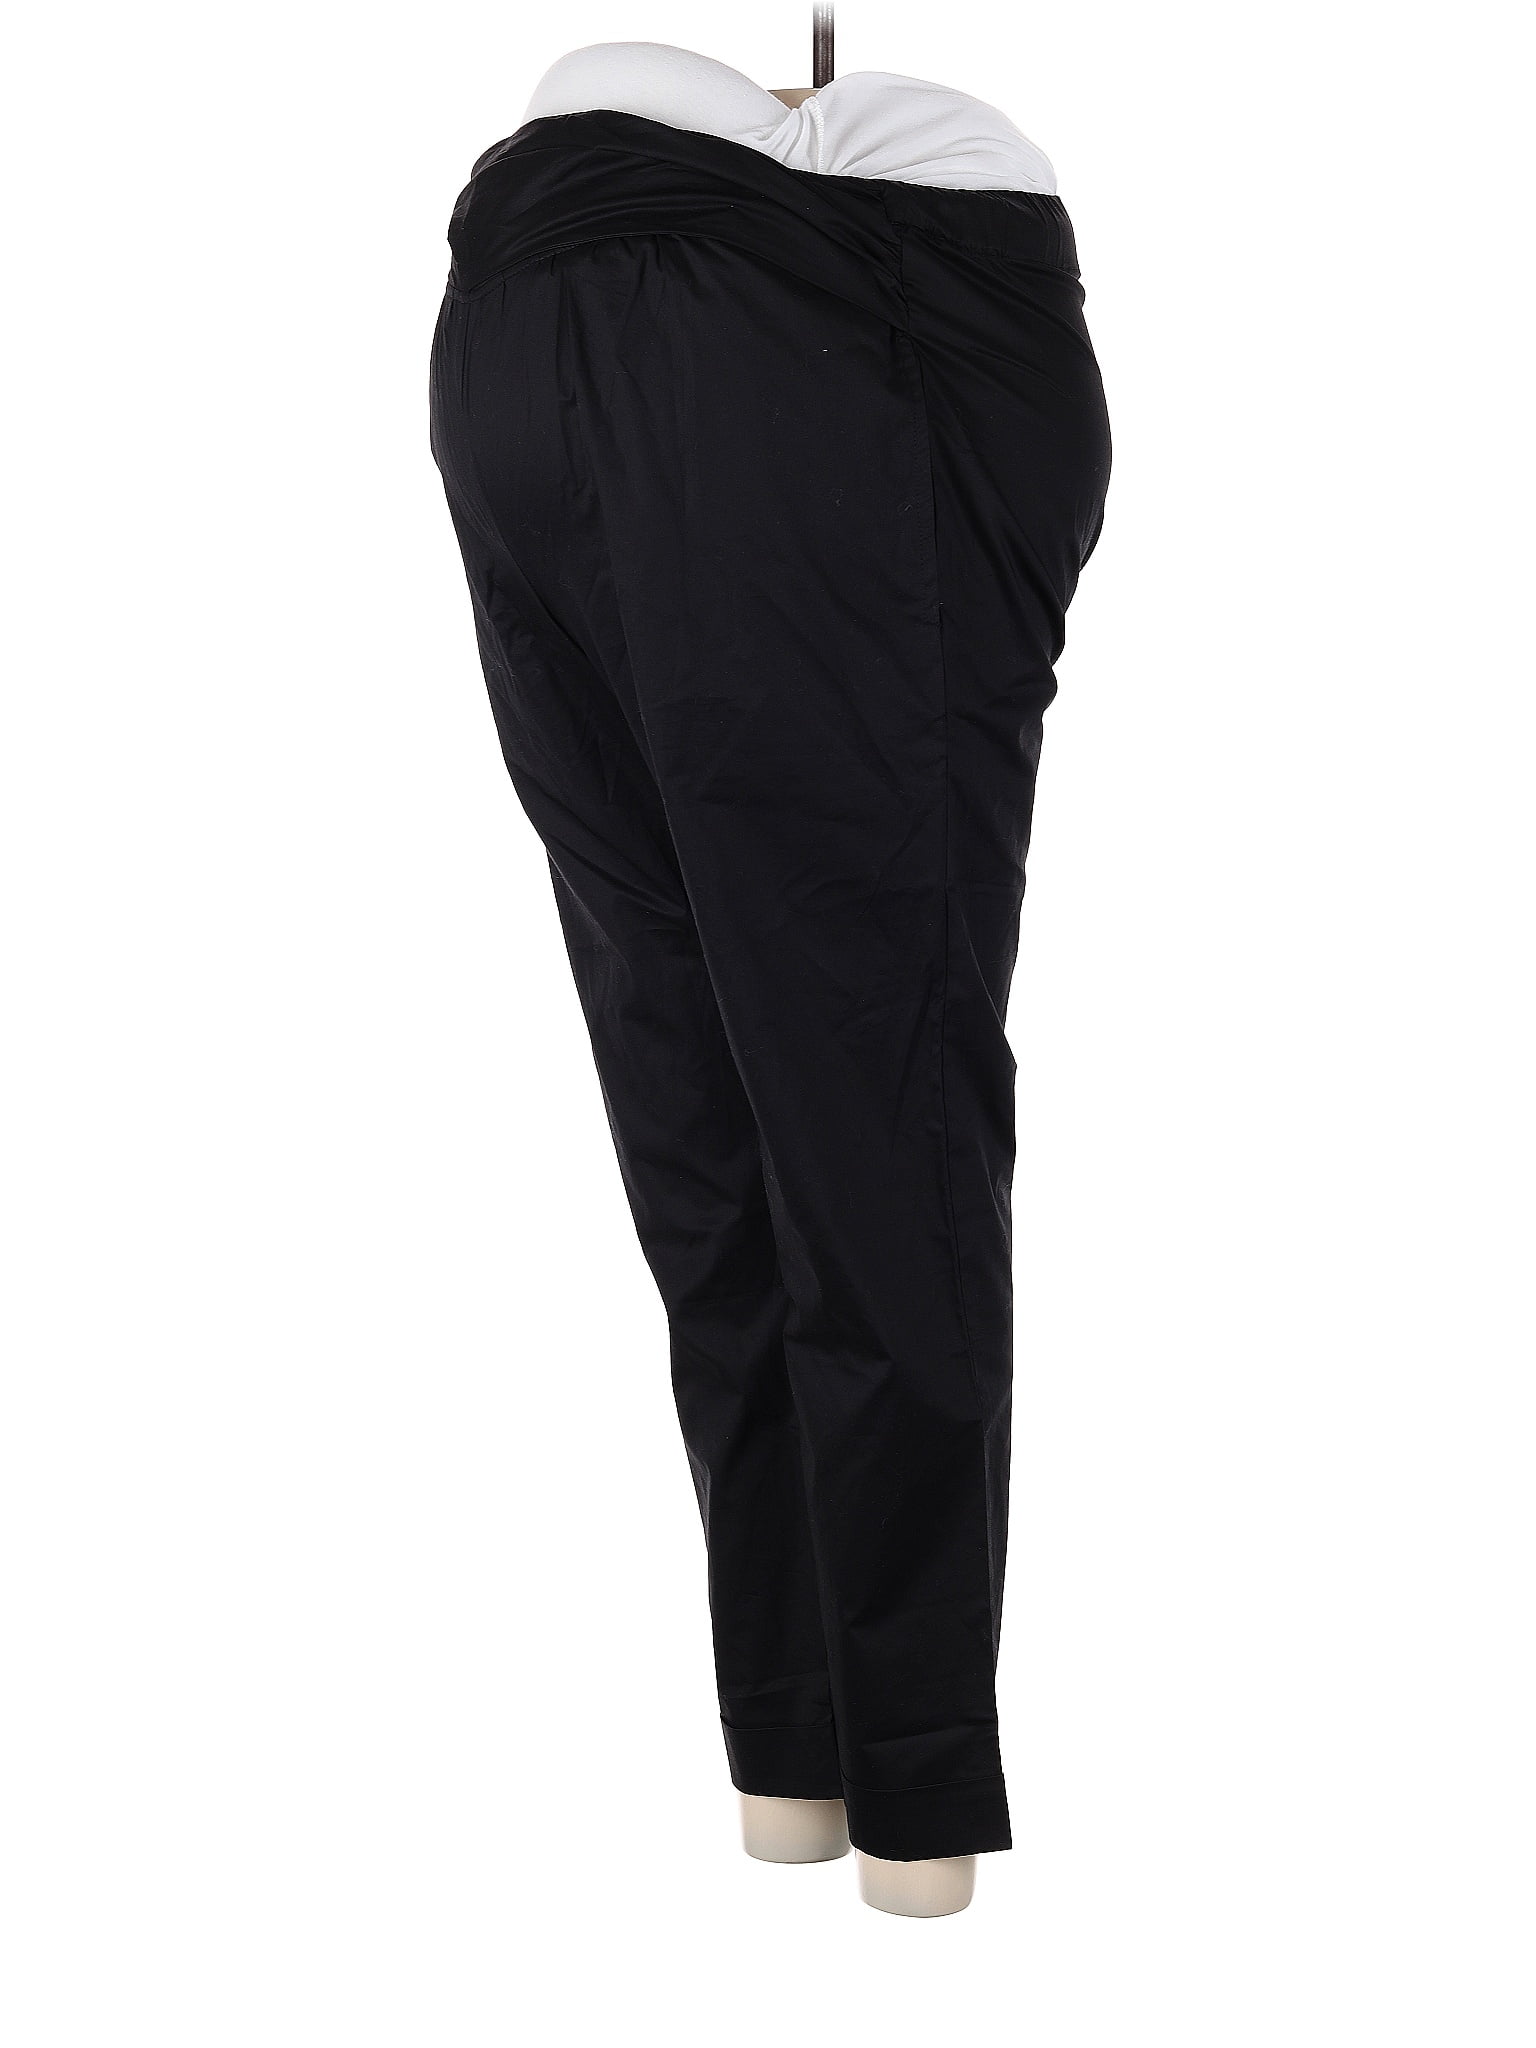 Hatch Solid Black Dress Pants Size Med Maternity (2) (Maternity) - 82% off